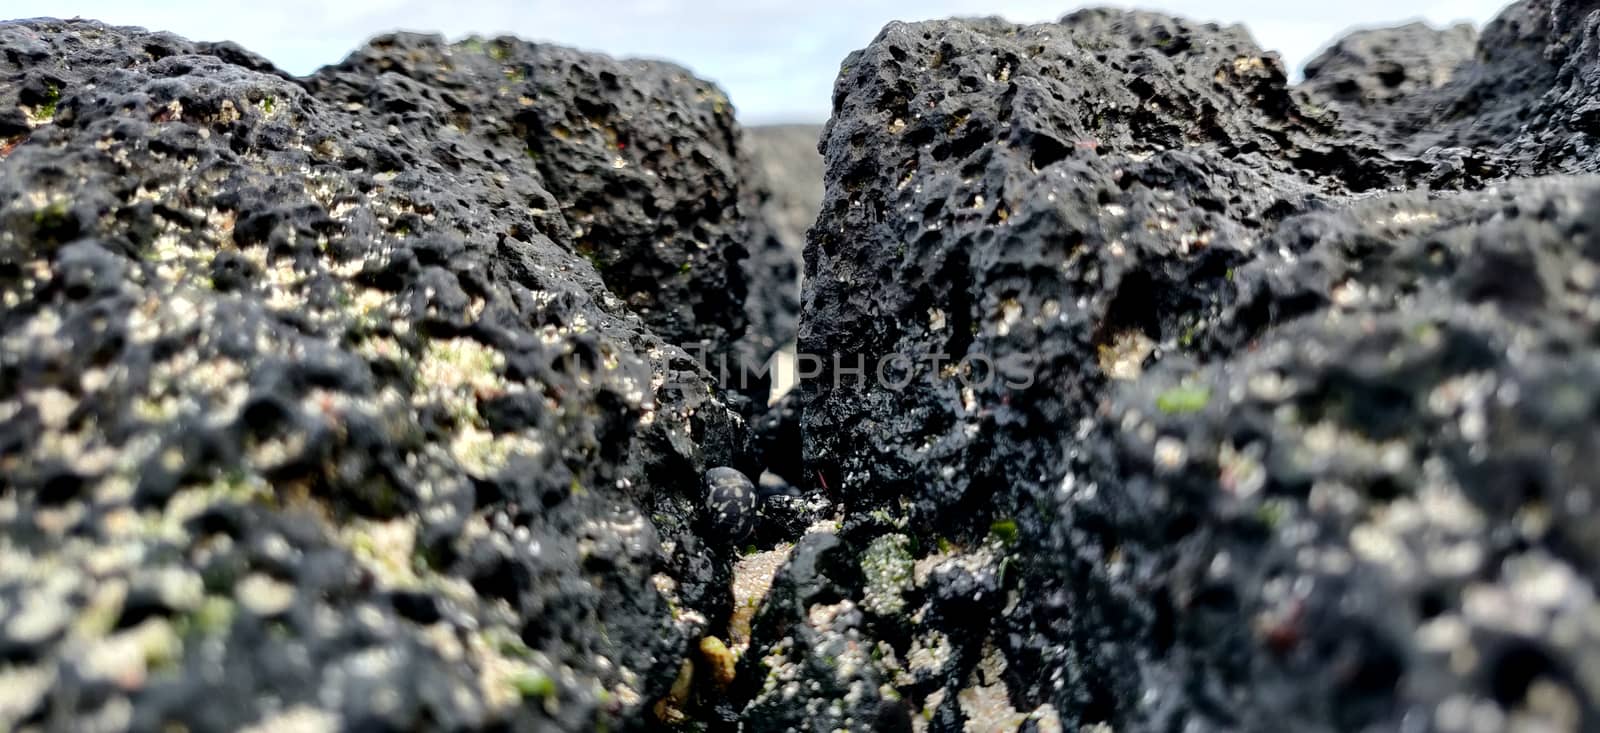 Macro shot of volcanic black rocks looking like mountain on the Hyeopjae beach by mshivangi92